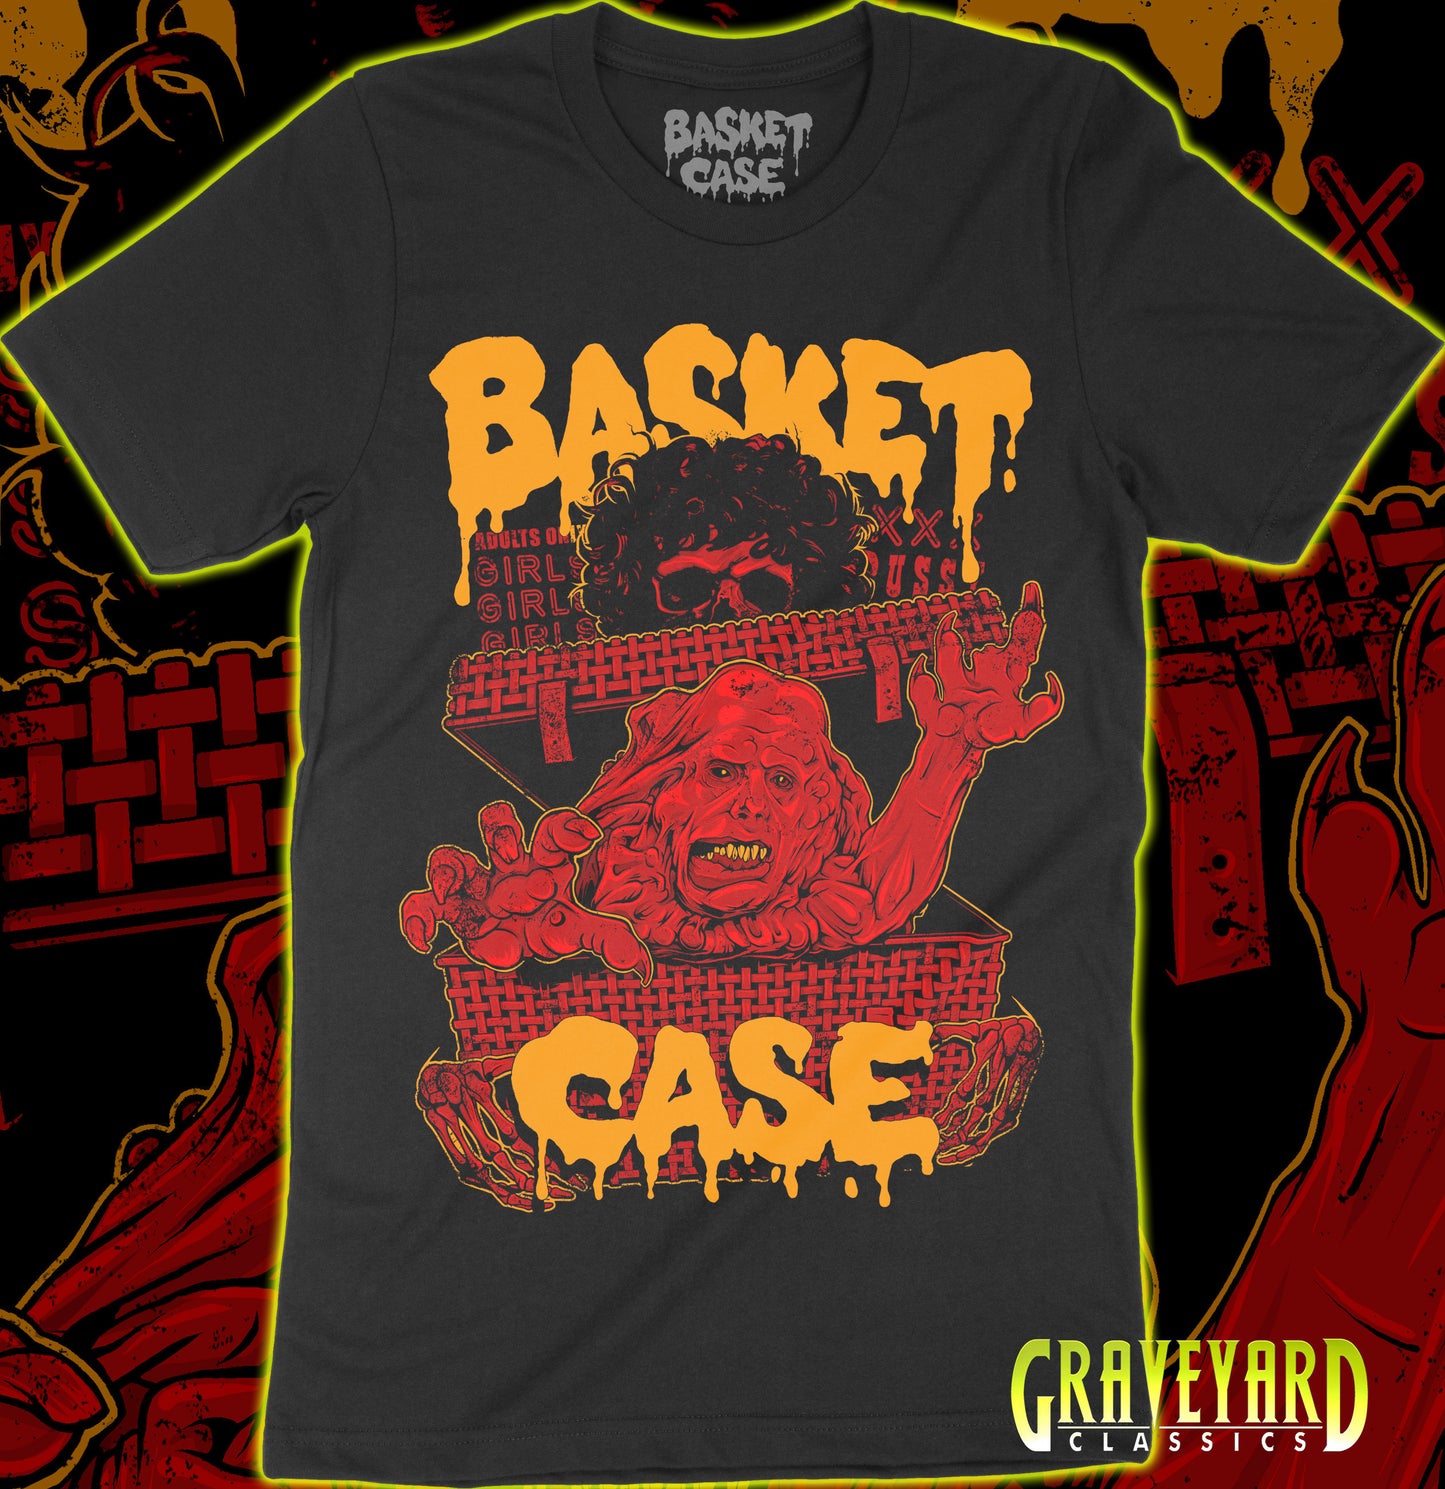 Basket Case - Girls Girls Girls T-Shirt